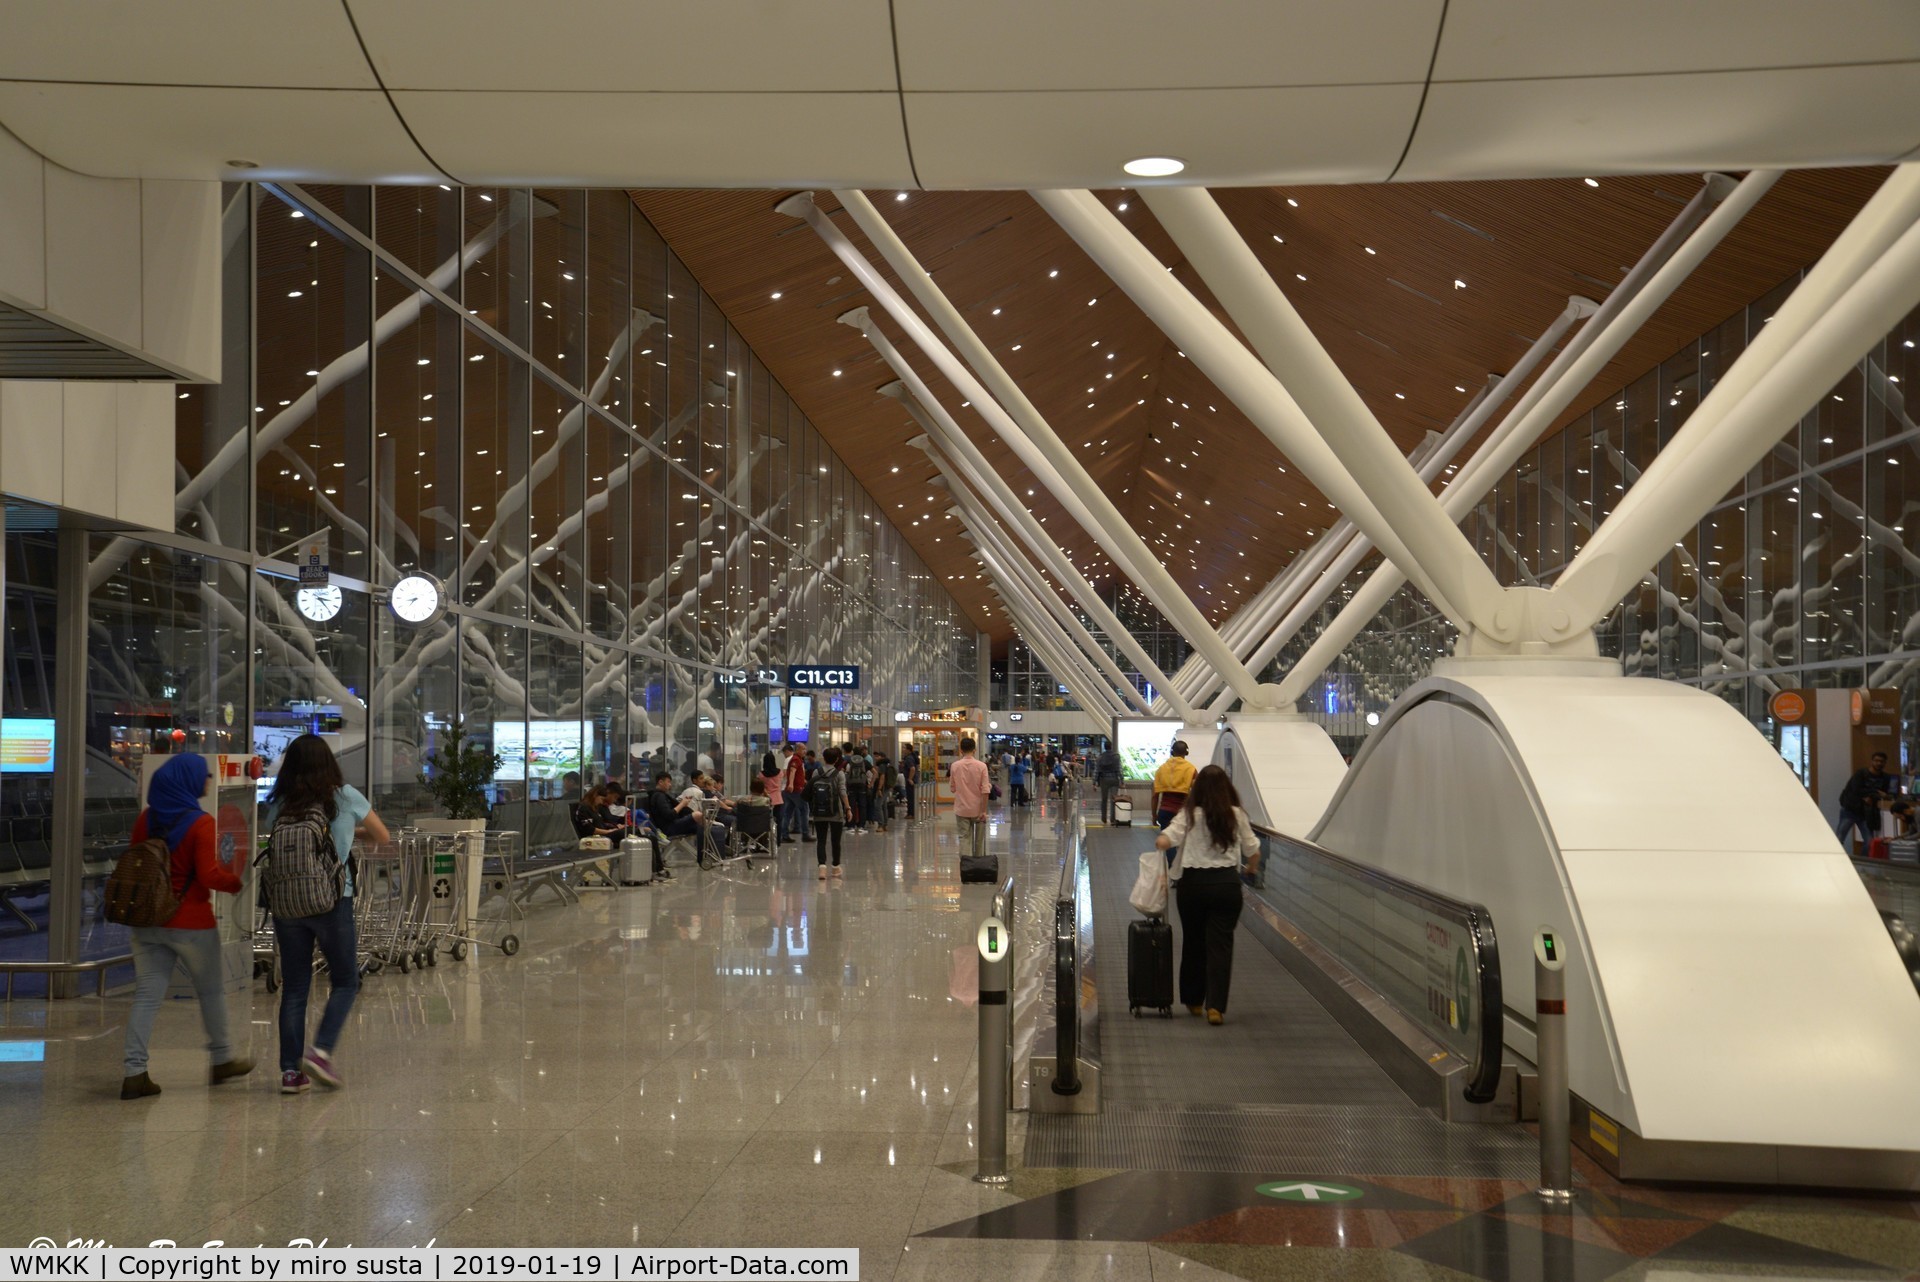 Kuala Lumpur International Airport, Sepang, Selangor Malaysia (WMKK) - Kuala Lumpur International Airport transit area.